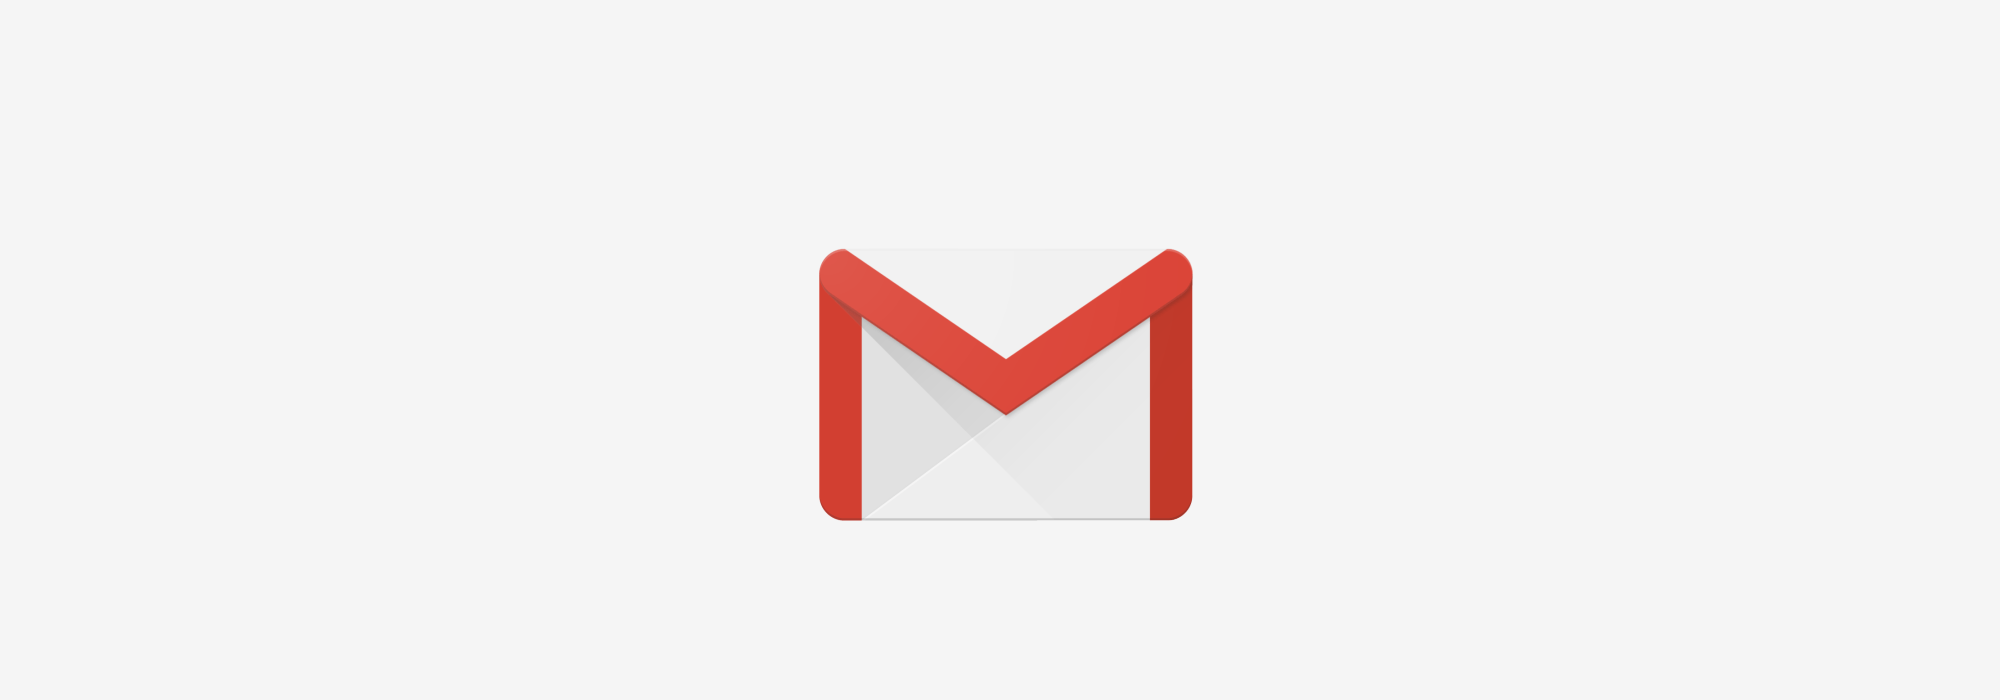 iPad Email Logo - Inbox by Gmail